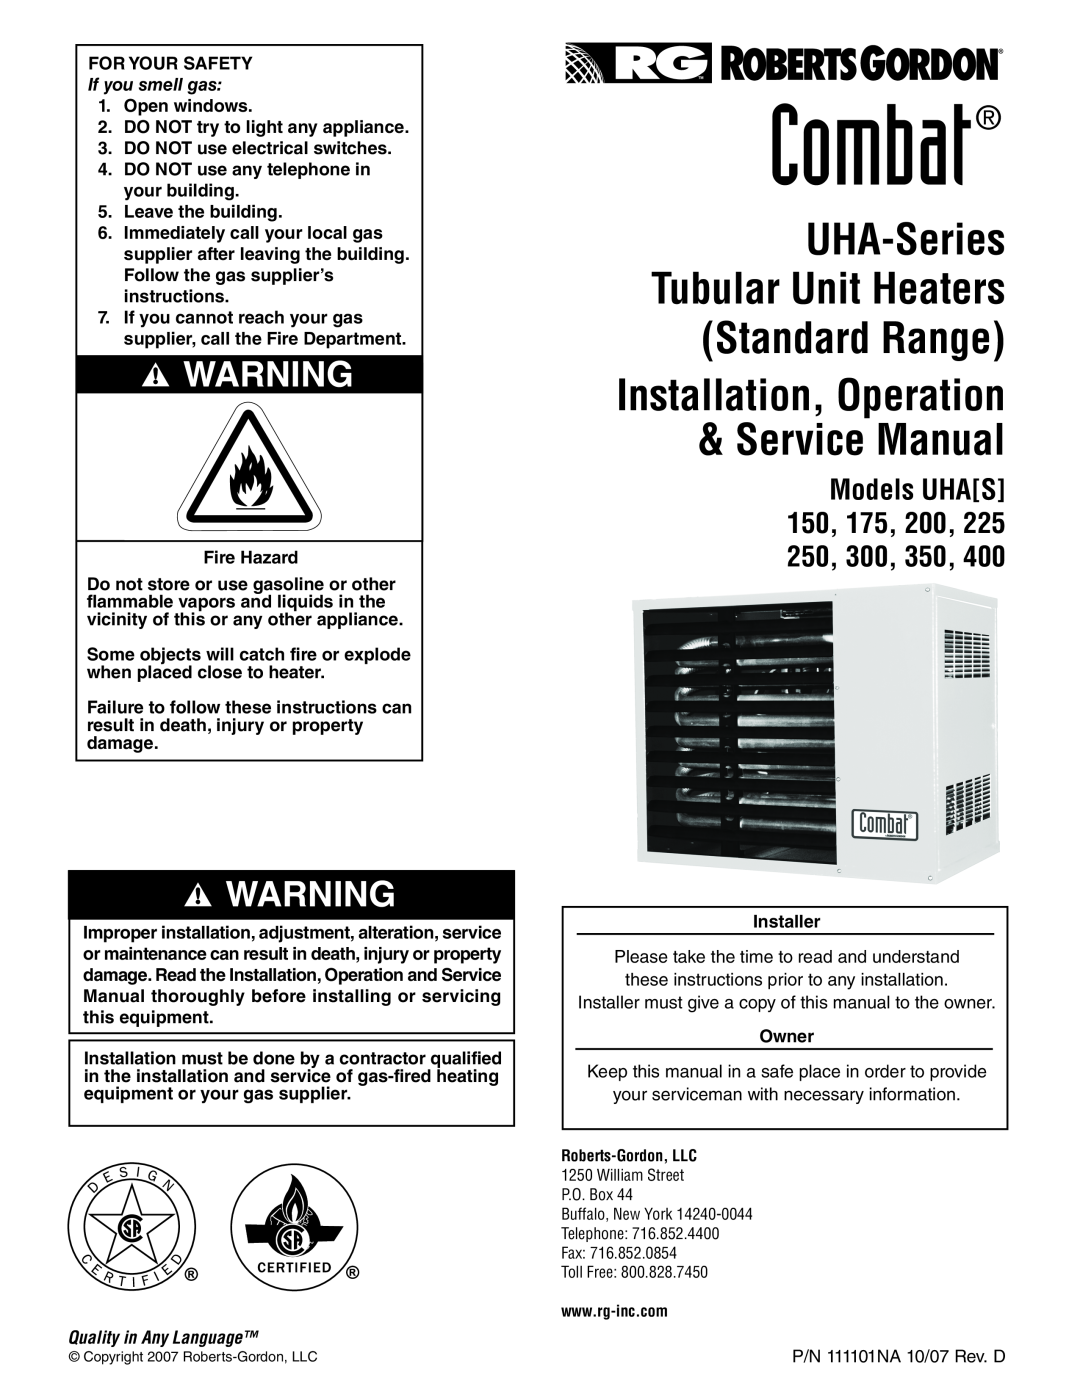 Roberts Gorden 350 service manual Combat, UHA-Series Tubular Unit Heaters Standard Range, Models UHAS, If you smell gas 